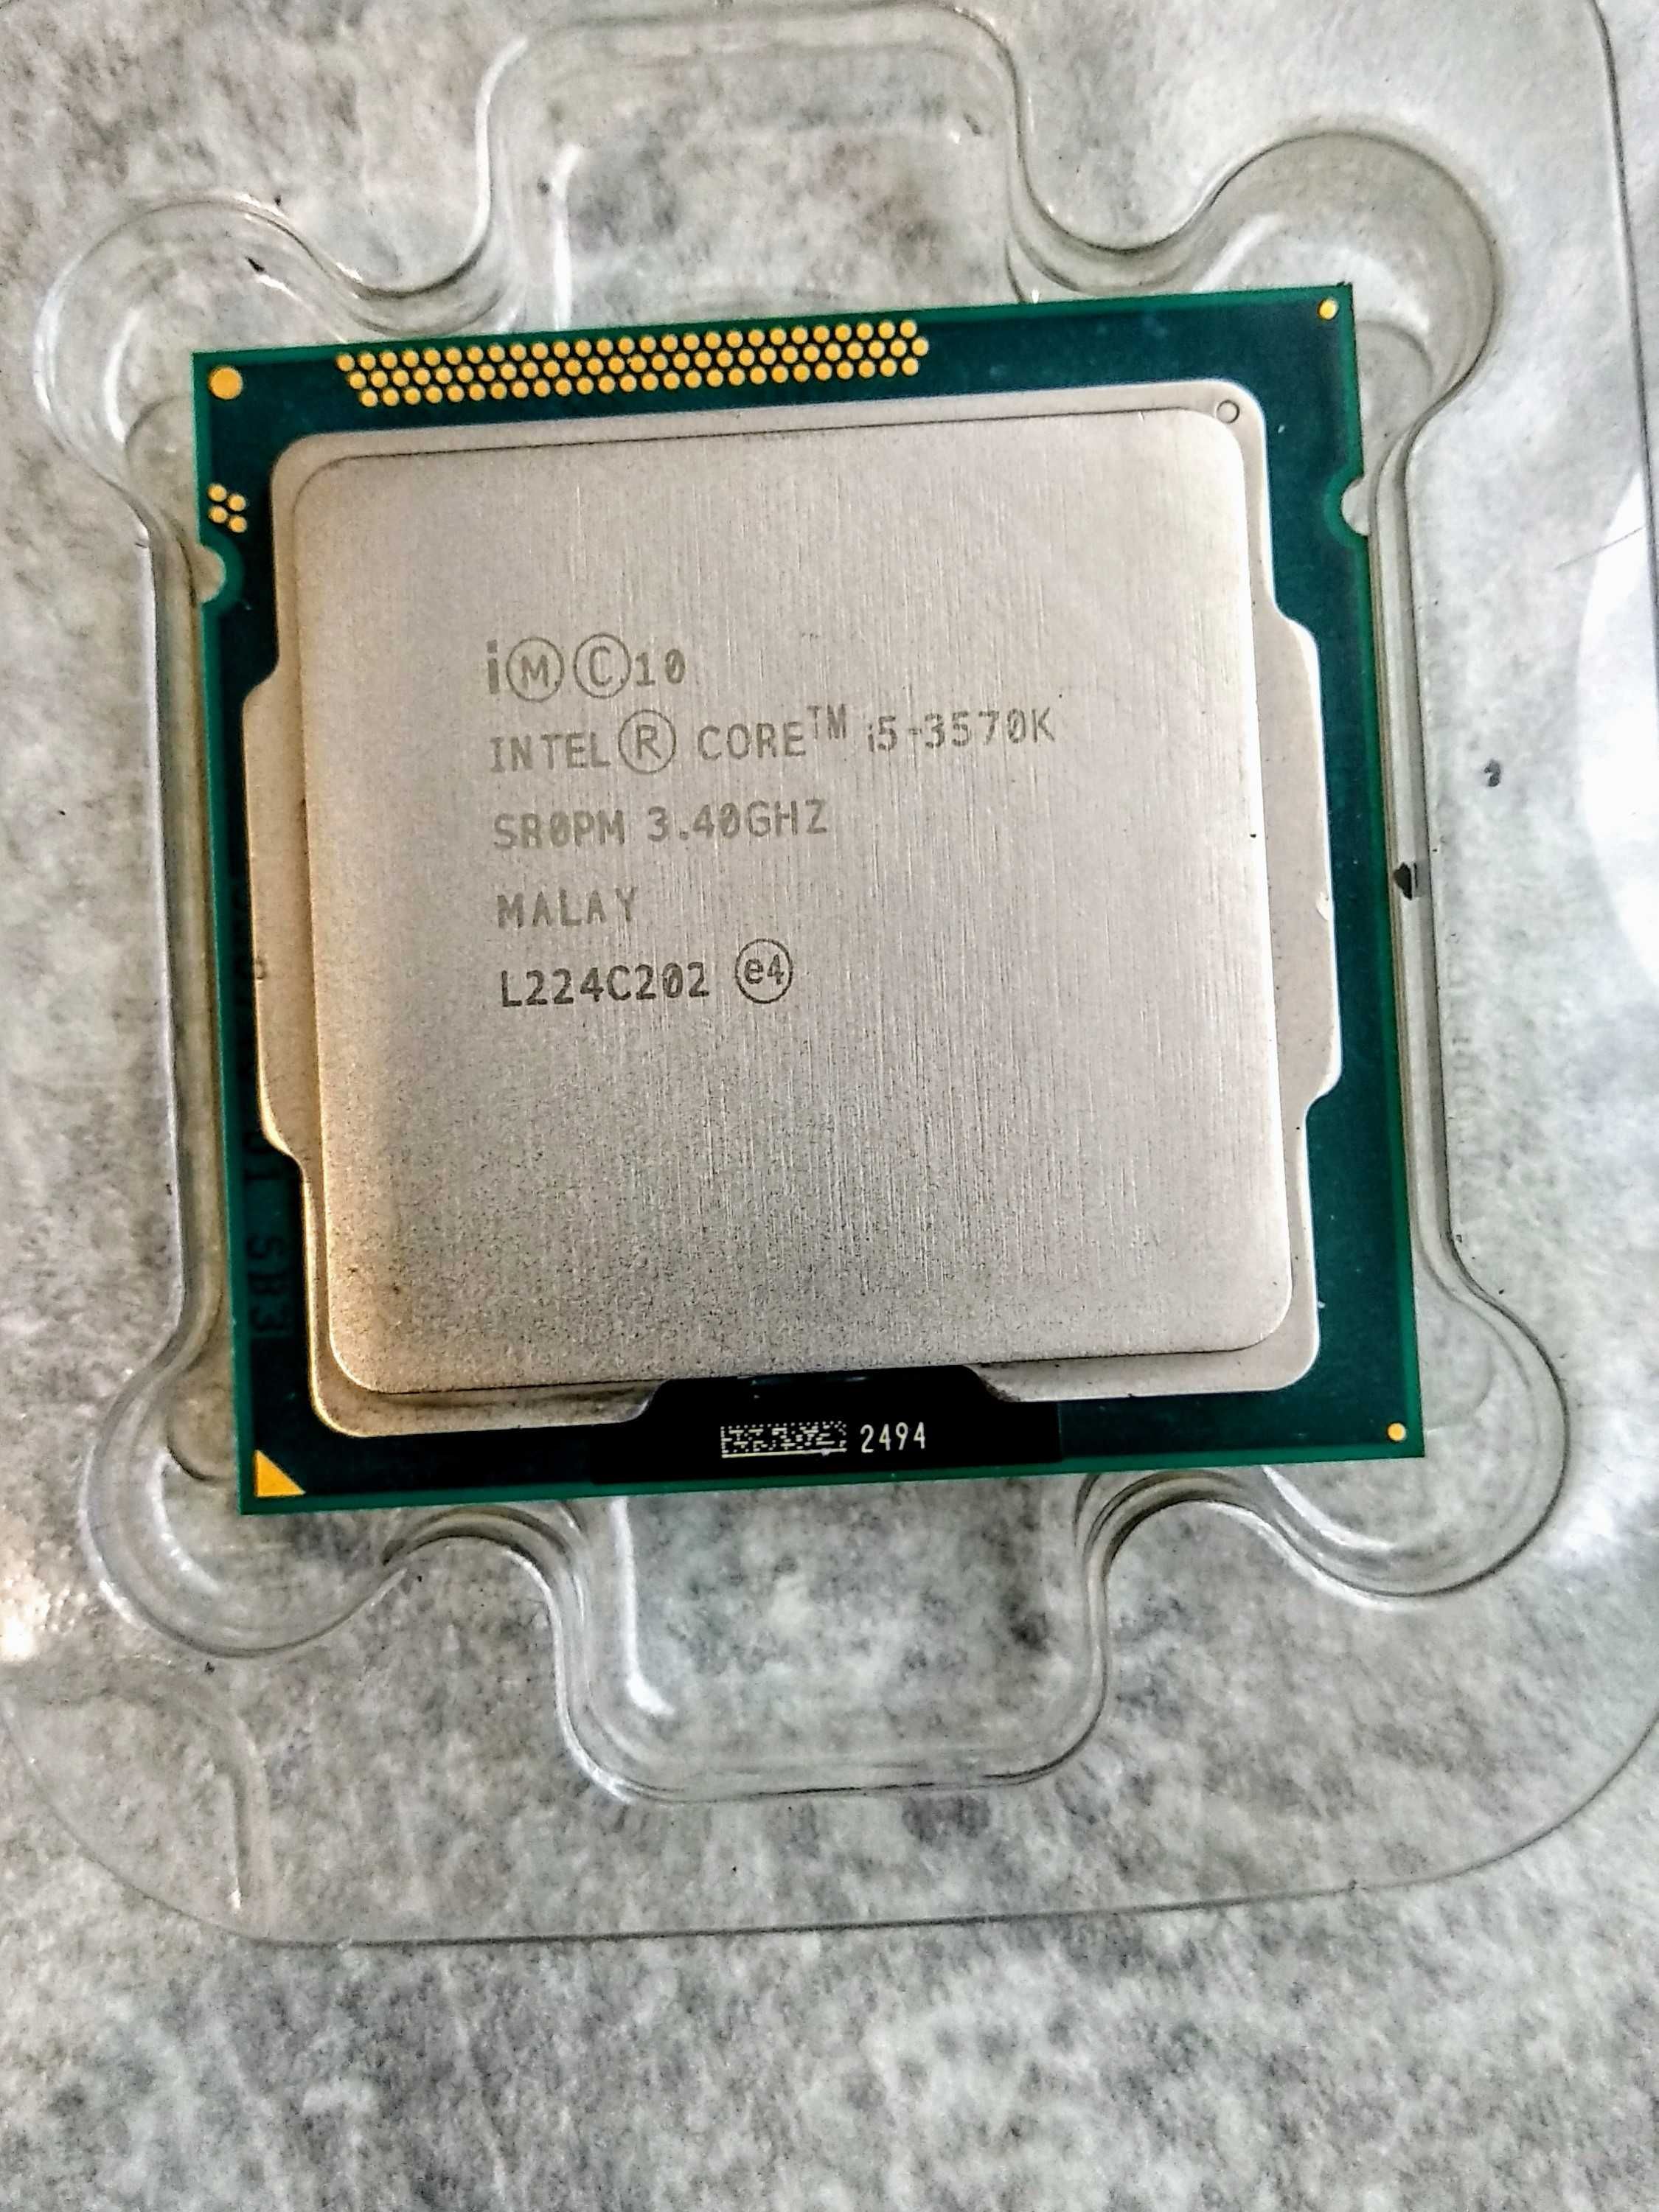 Intel Core i5-3570К, Intel Core I3 550, Intel Pentium E5300